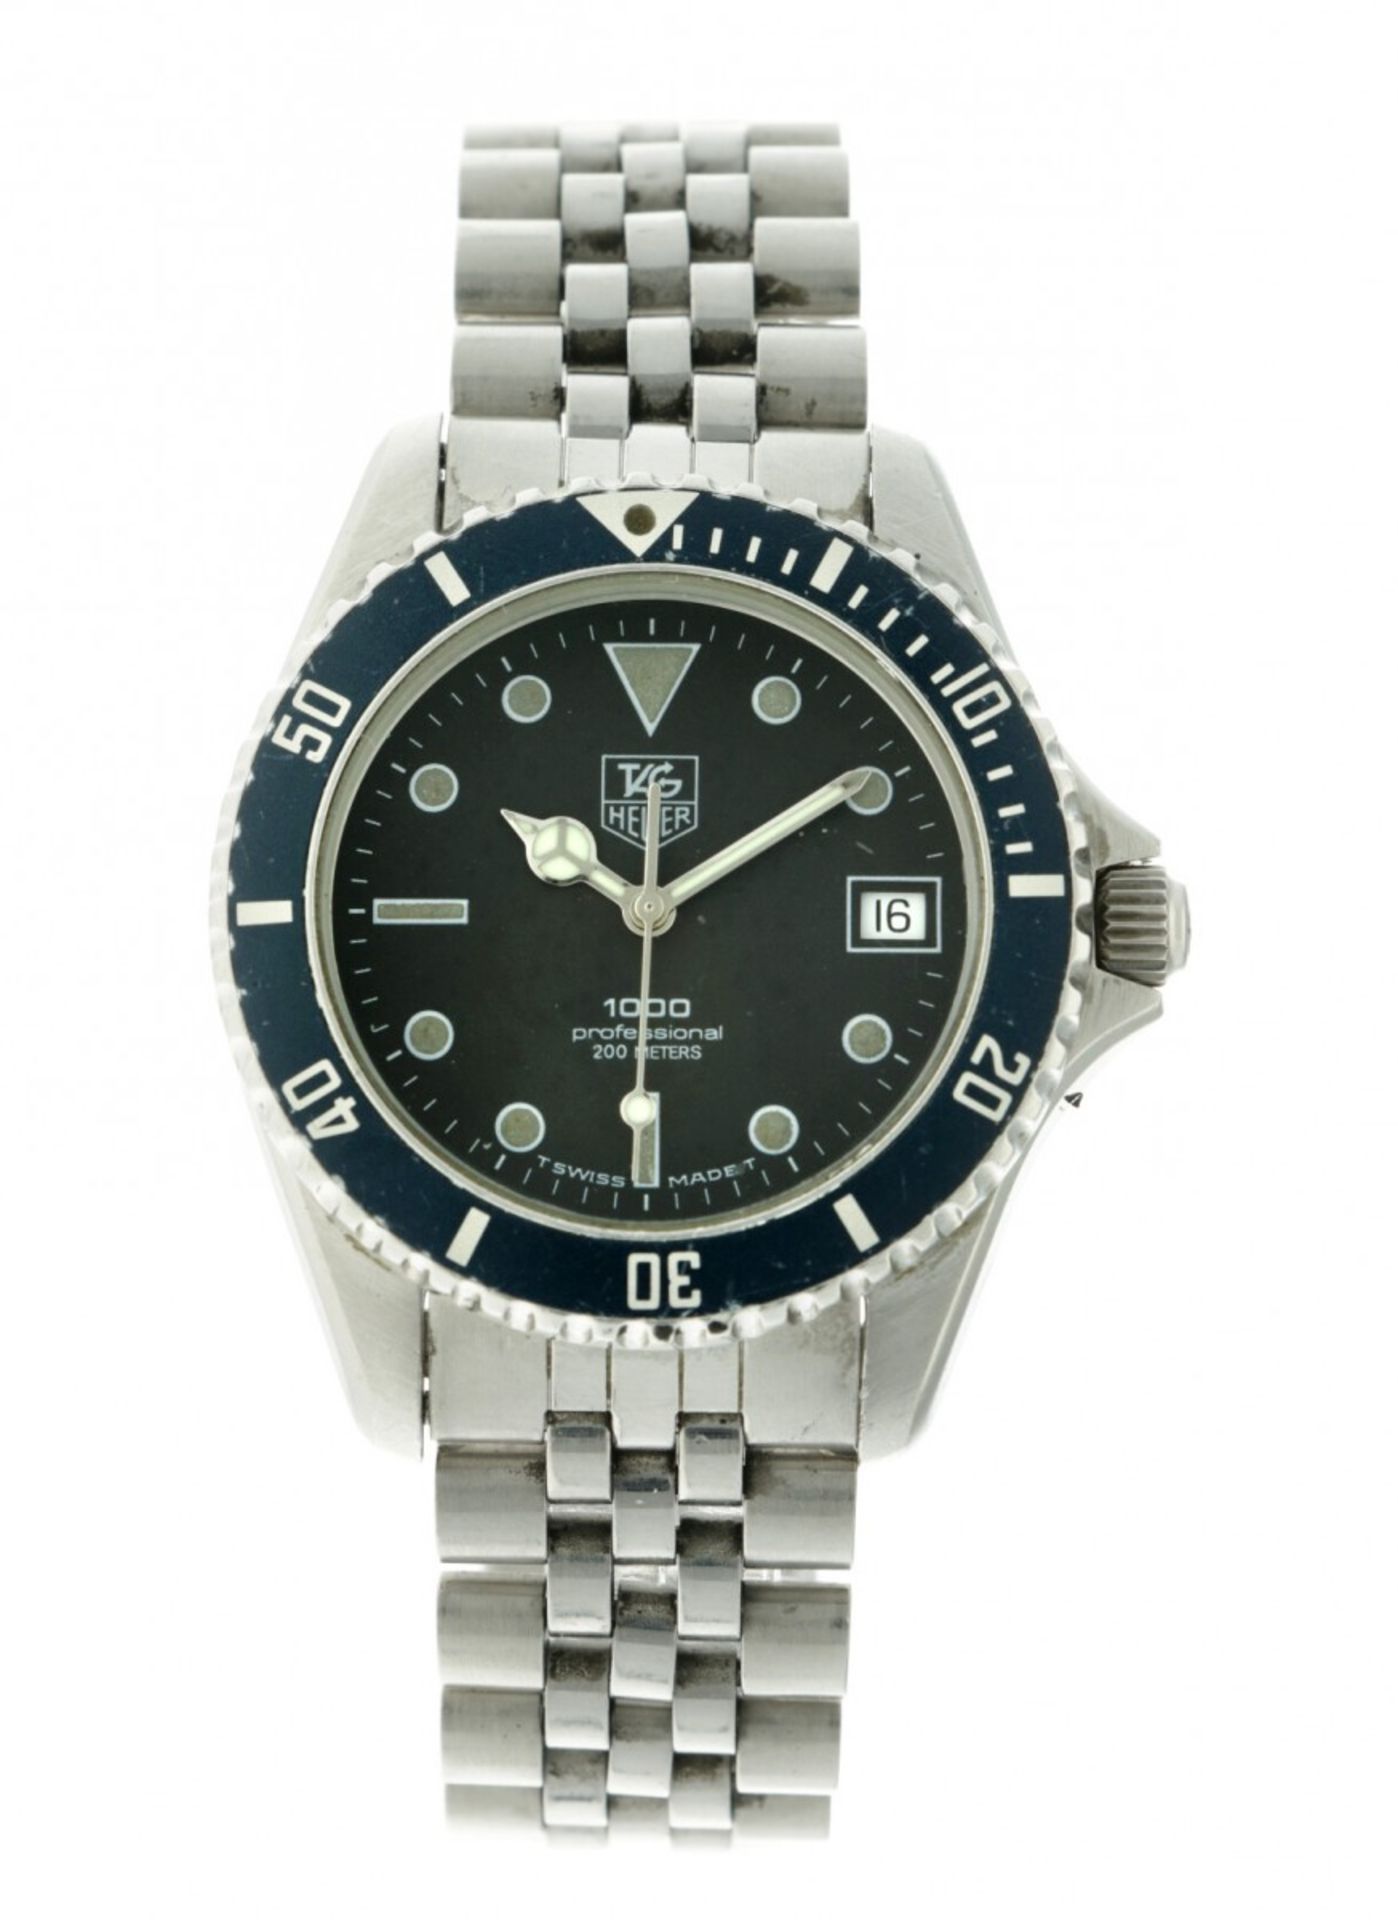 Tag Heuer 1000 Professional 980.013D - Men's watch appr. 1992.